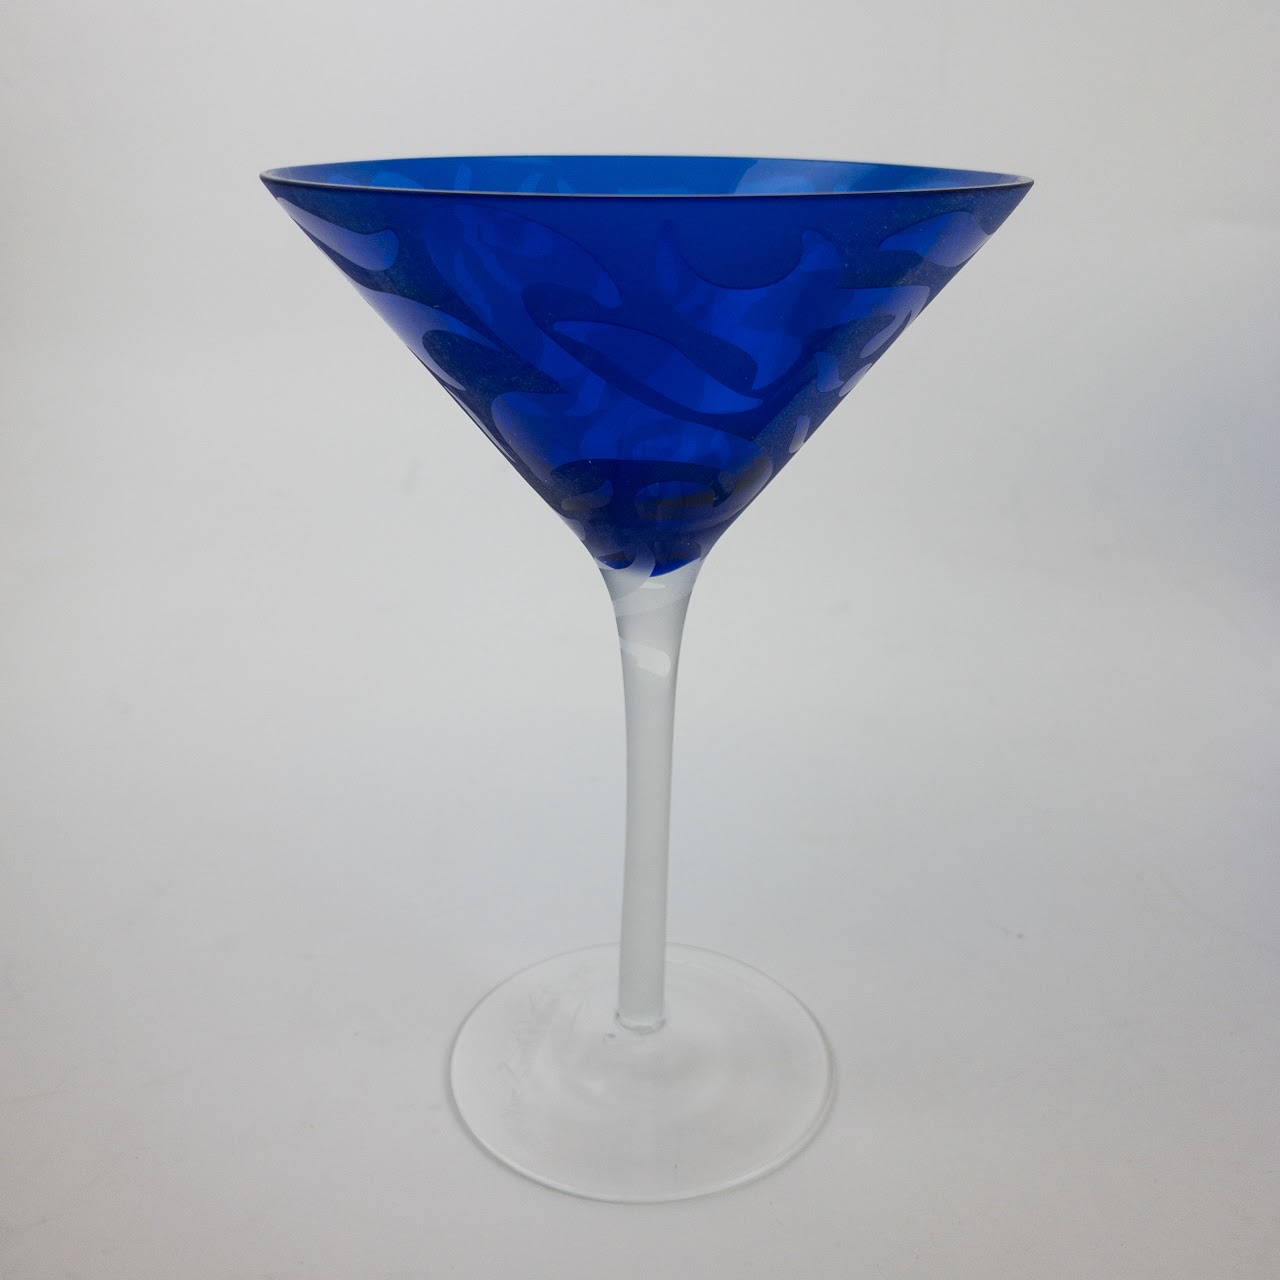 Retro Vintage Martini Cocktail Glasses LG w Twisted Blue Stems Pair